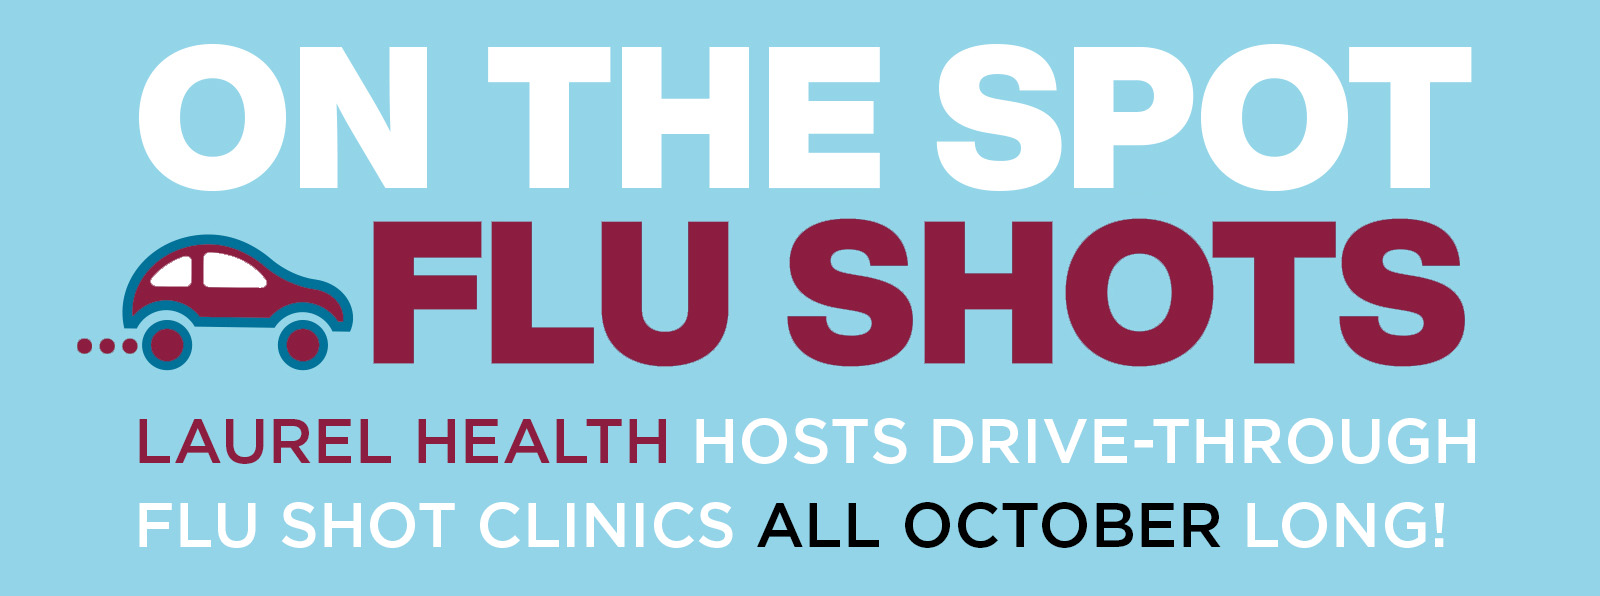 Laurel Health Hosts Drive-Through Flu Shot Clinics All October - Little Car Driving to On the Spot Flu Shots